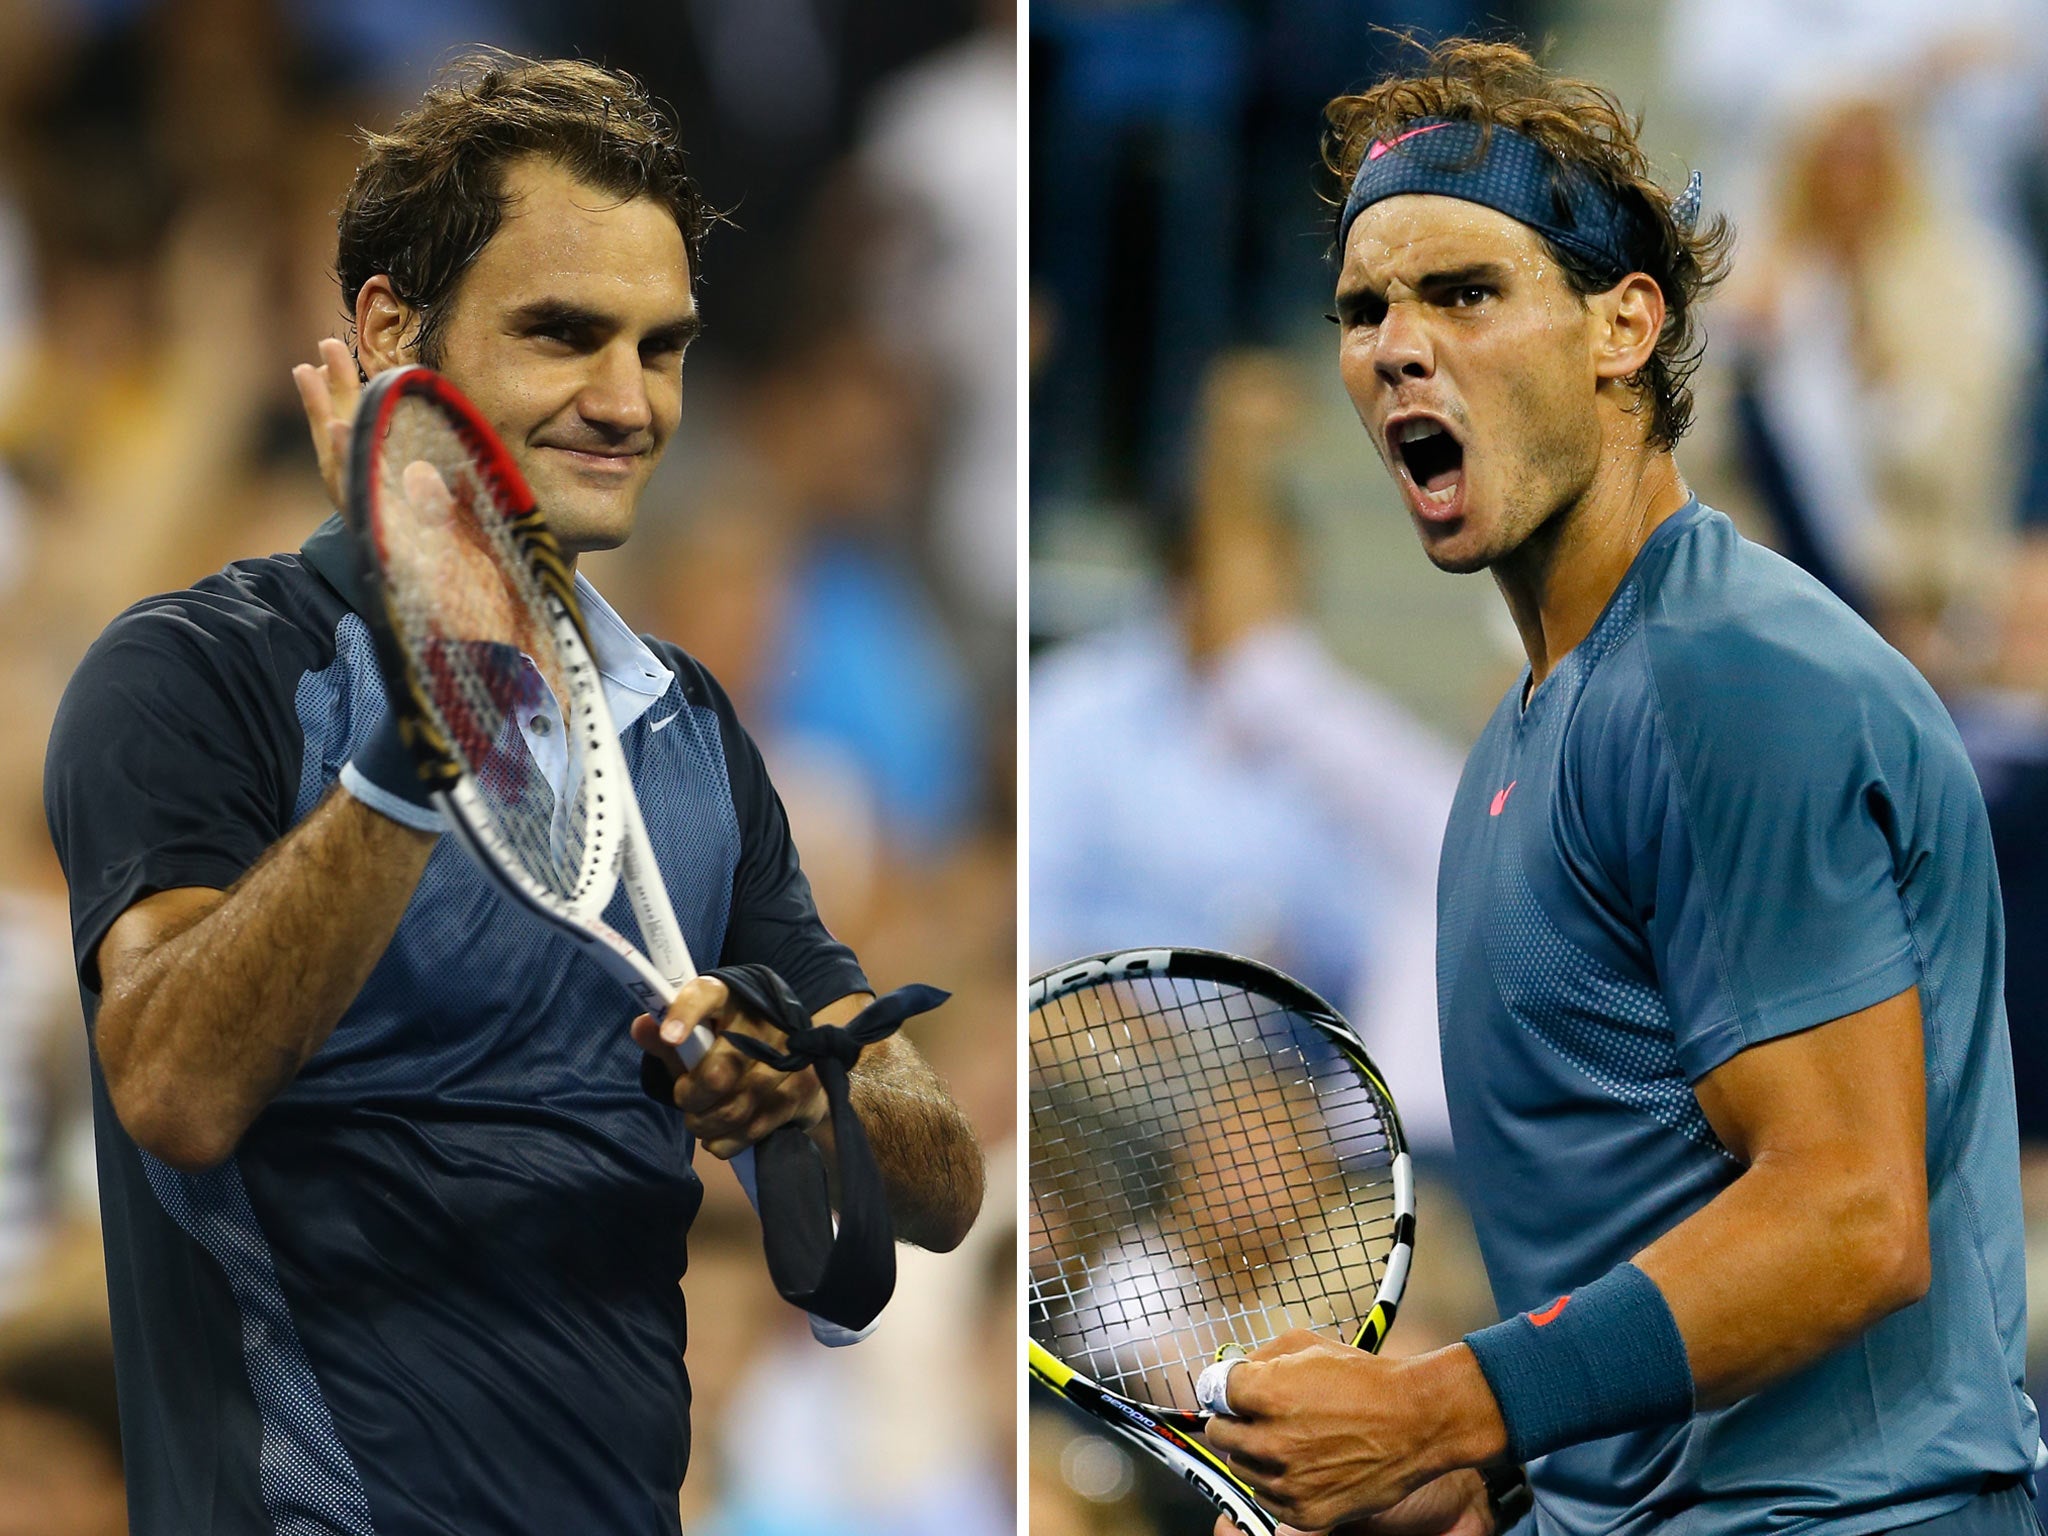 Roger Federer and Rafael Nadal meet again in a Grand Slam final